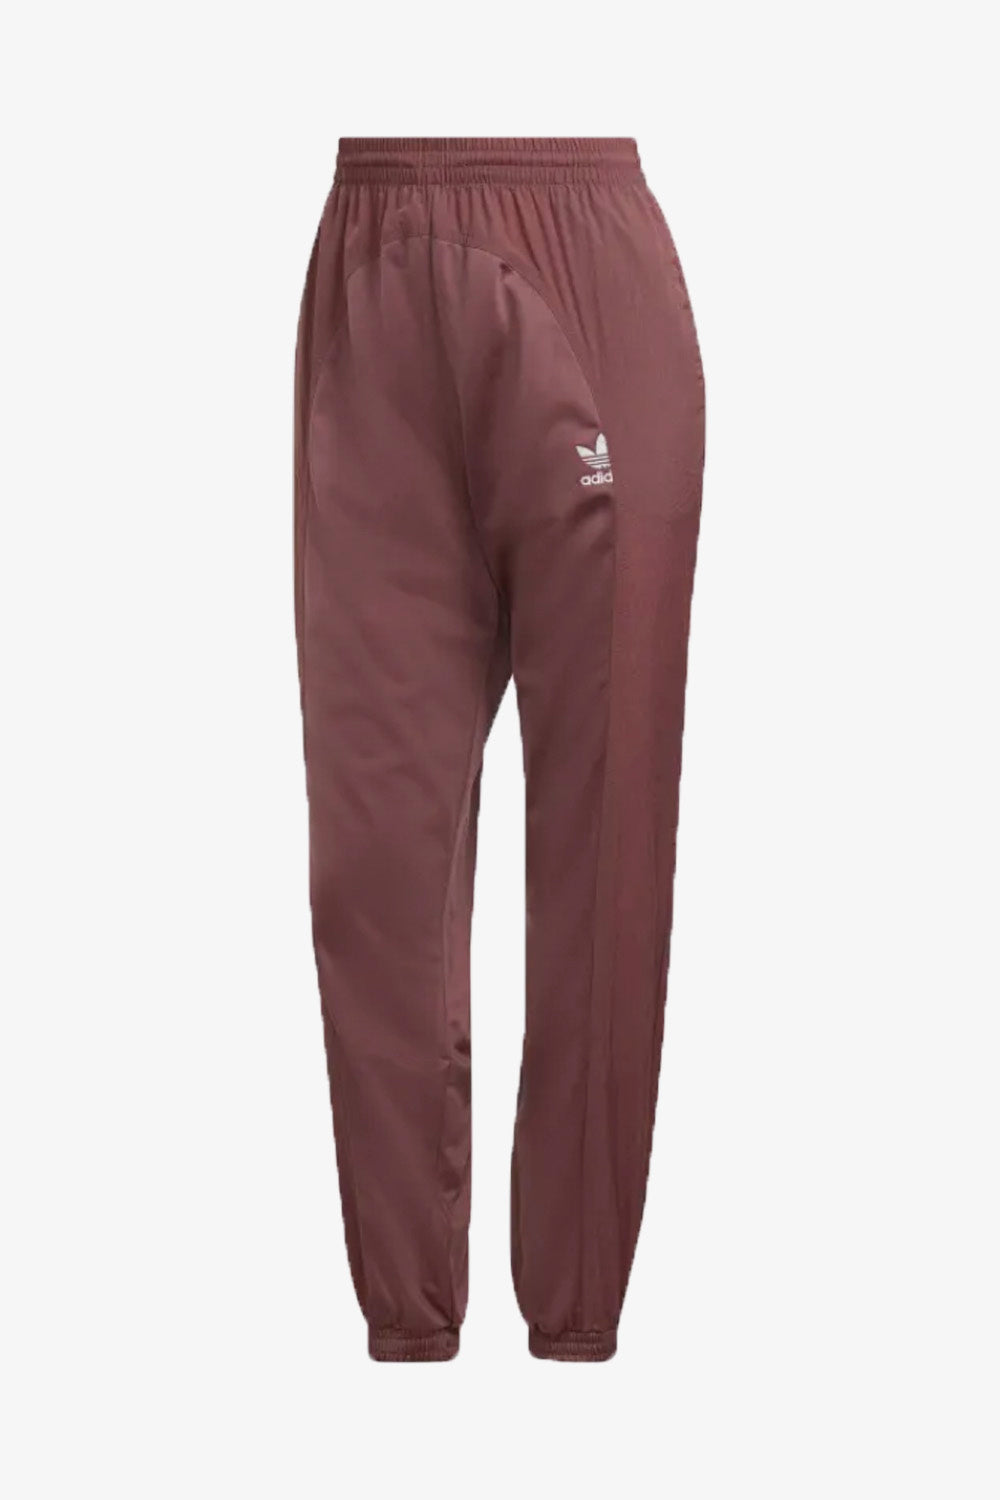 Pants HC7043 - Quicri - Adidas Originals